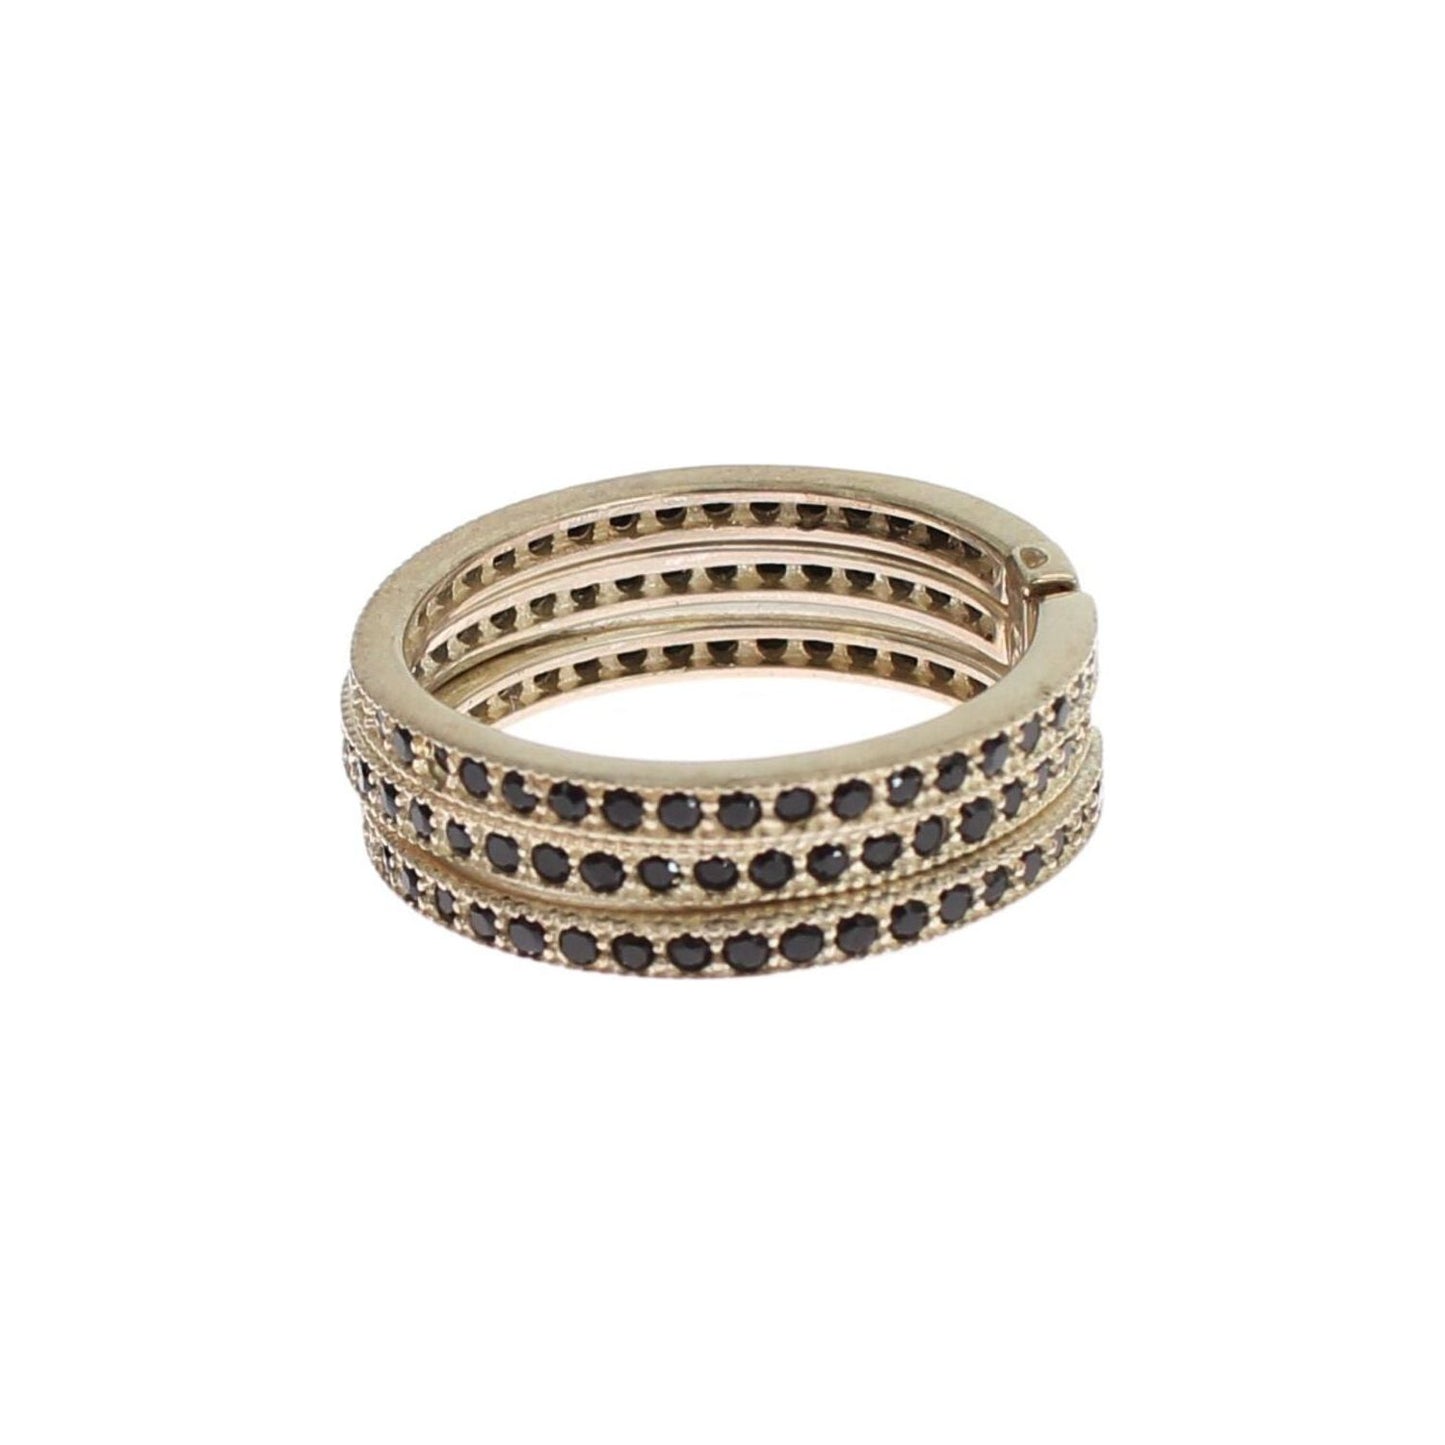 Nialaya Chic Silver & Black CZ Crystal Ring Ring black-cz-925-sterling-silver-womens-ring s-l1600-66-1-13048fd6-ad3.jpg